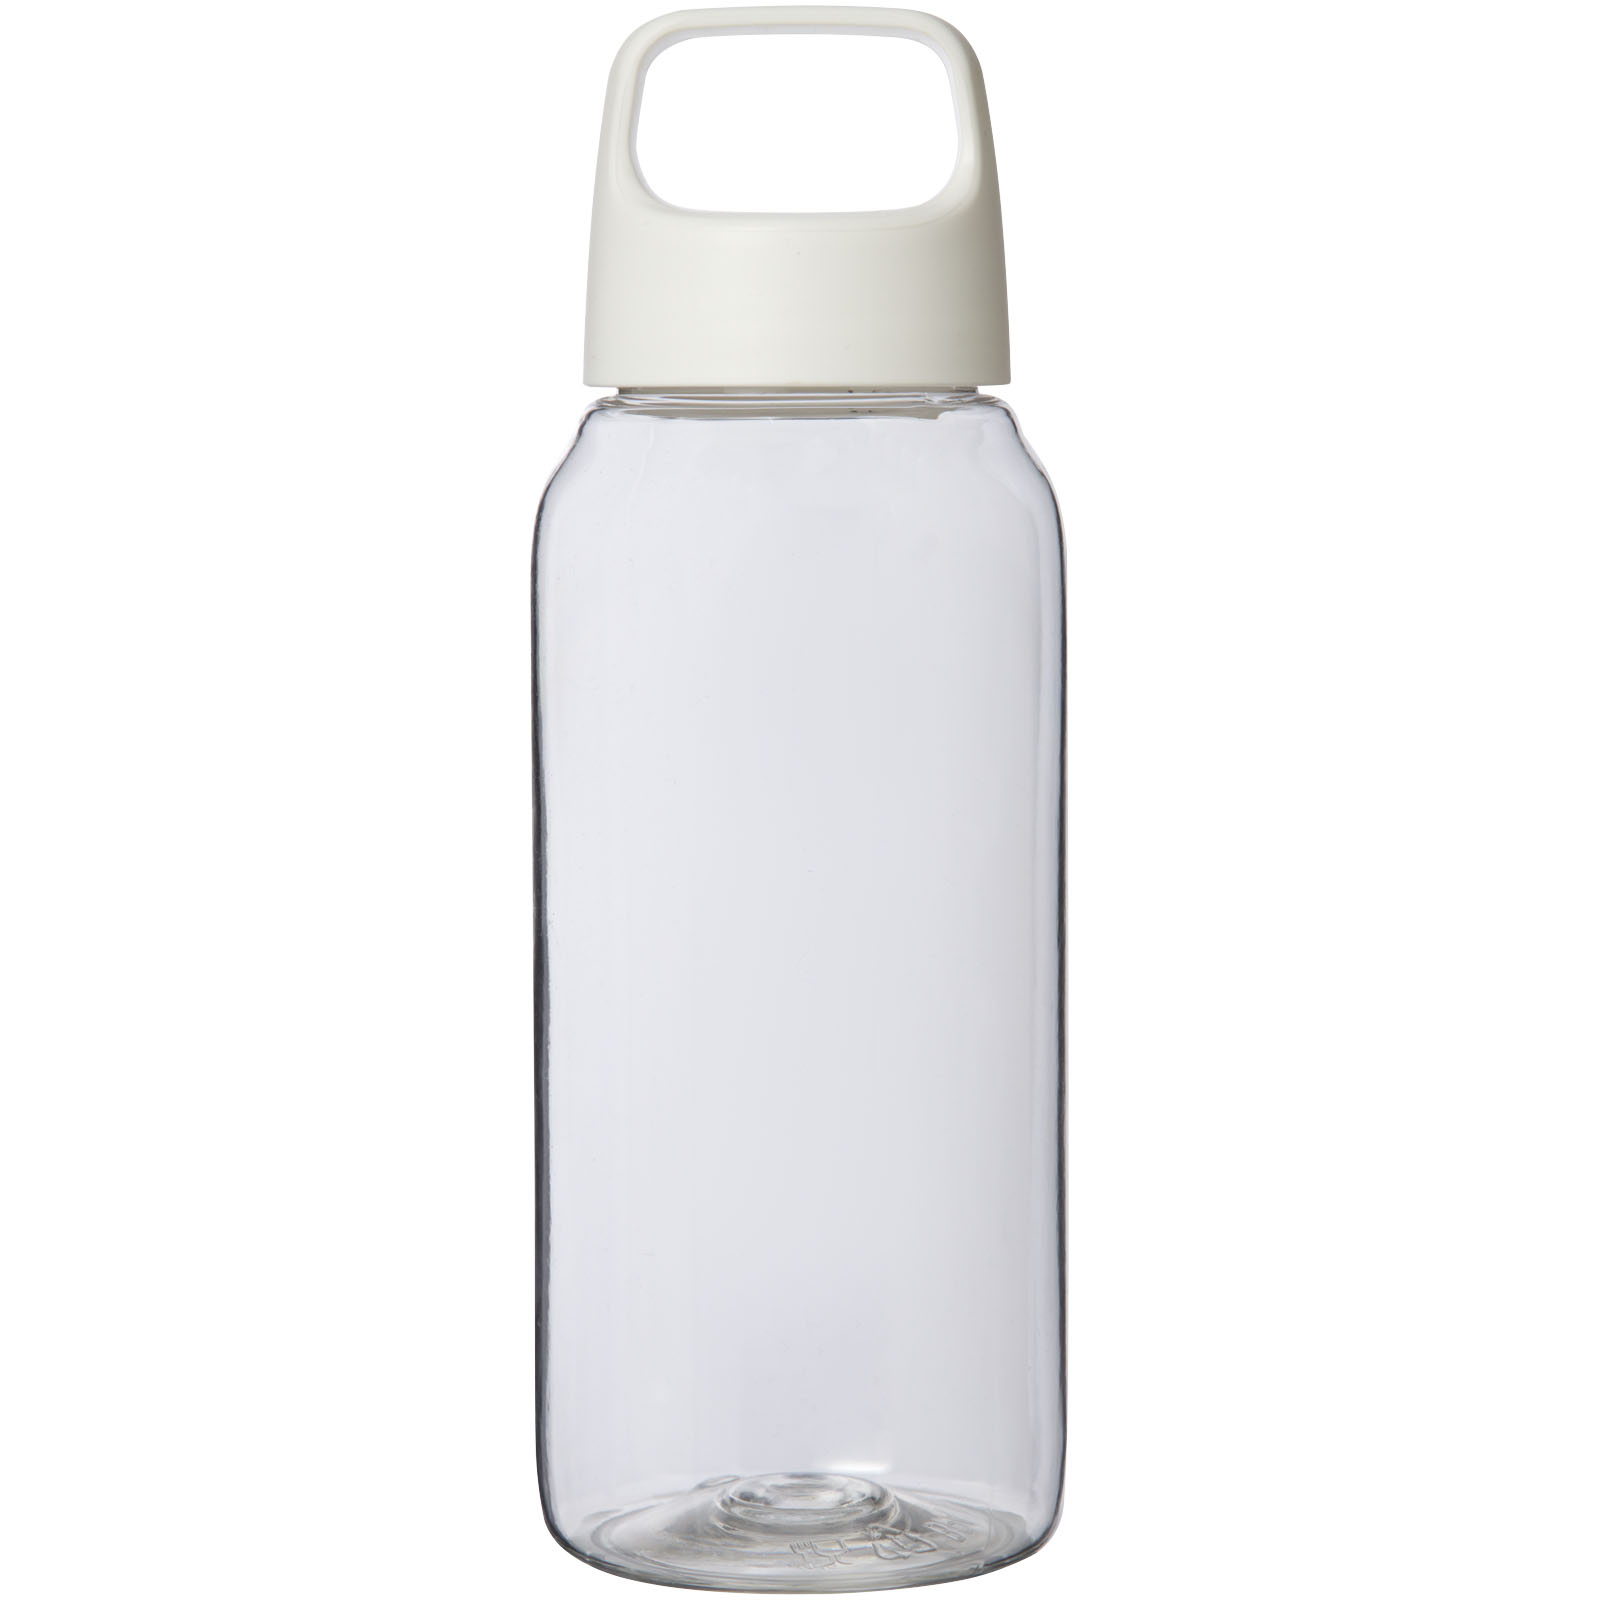 Advertising Water bottles - Bebo 500 ml recycled plastic water bottle - 1